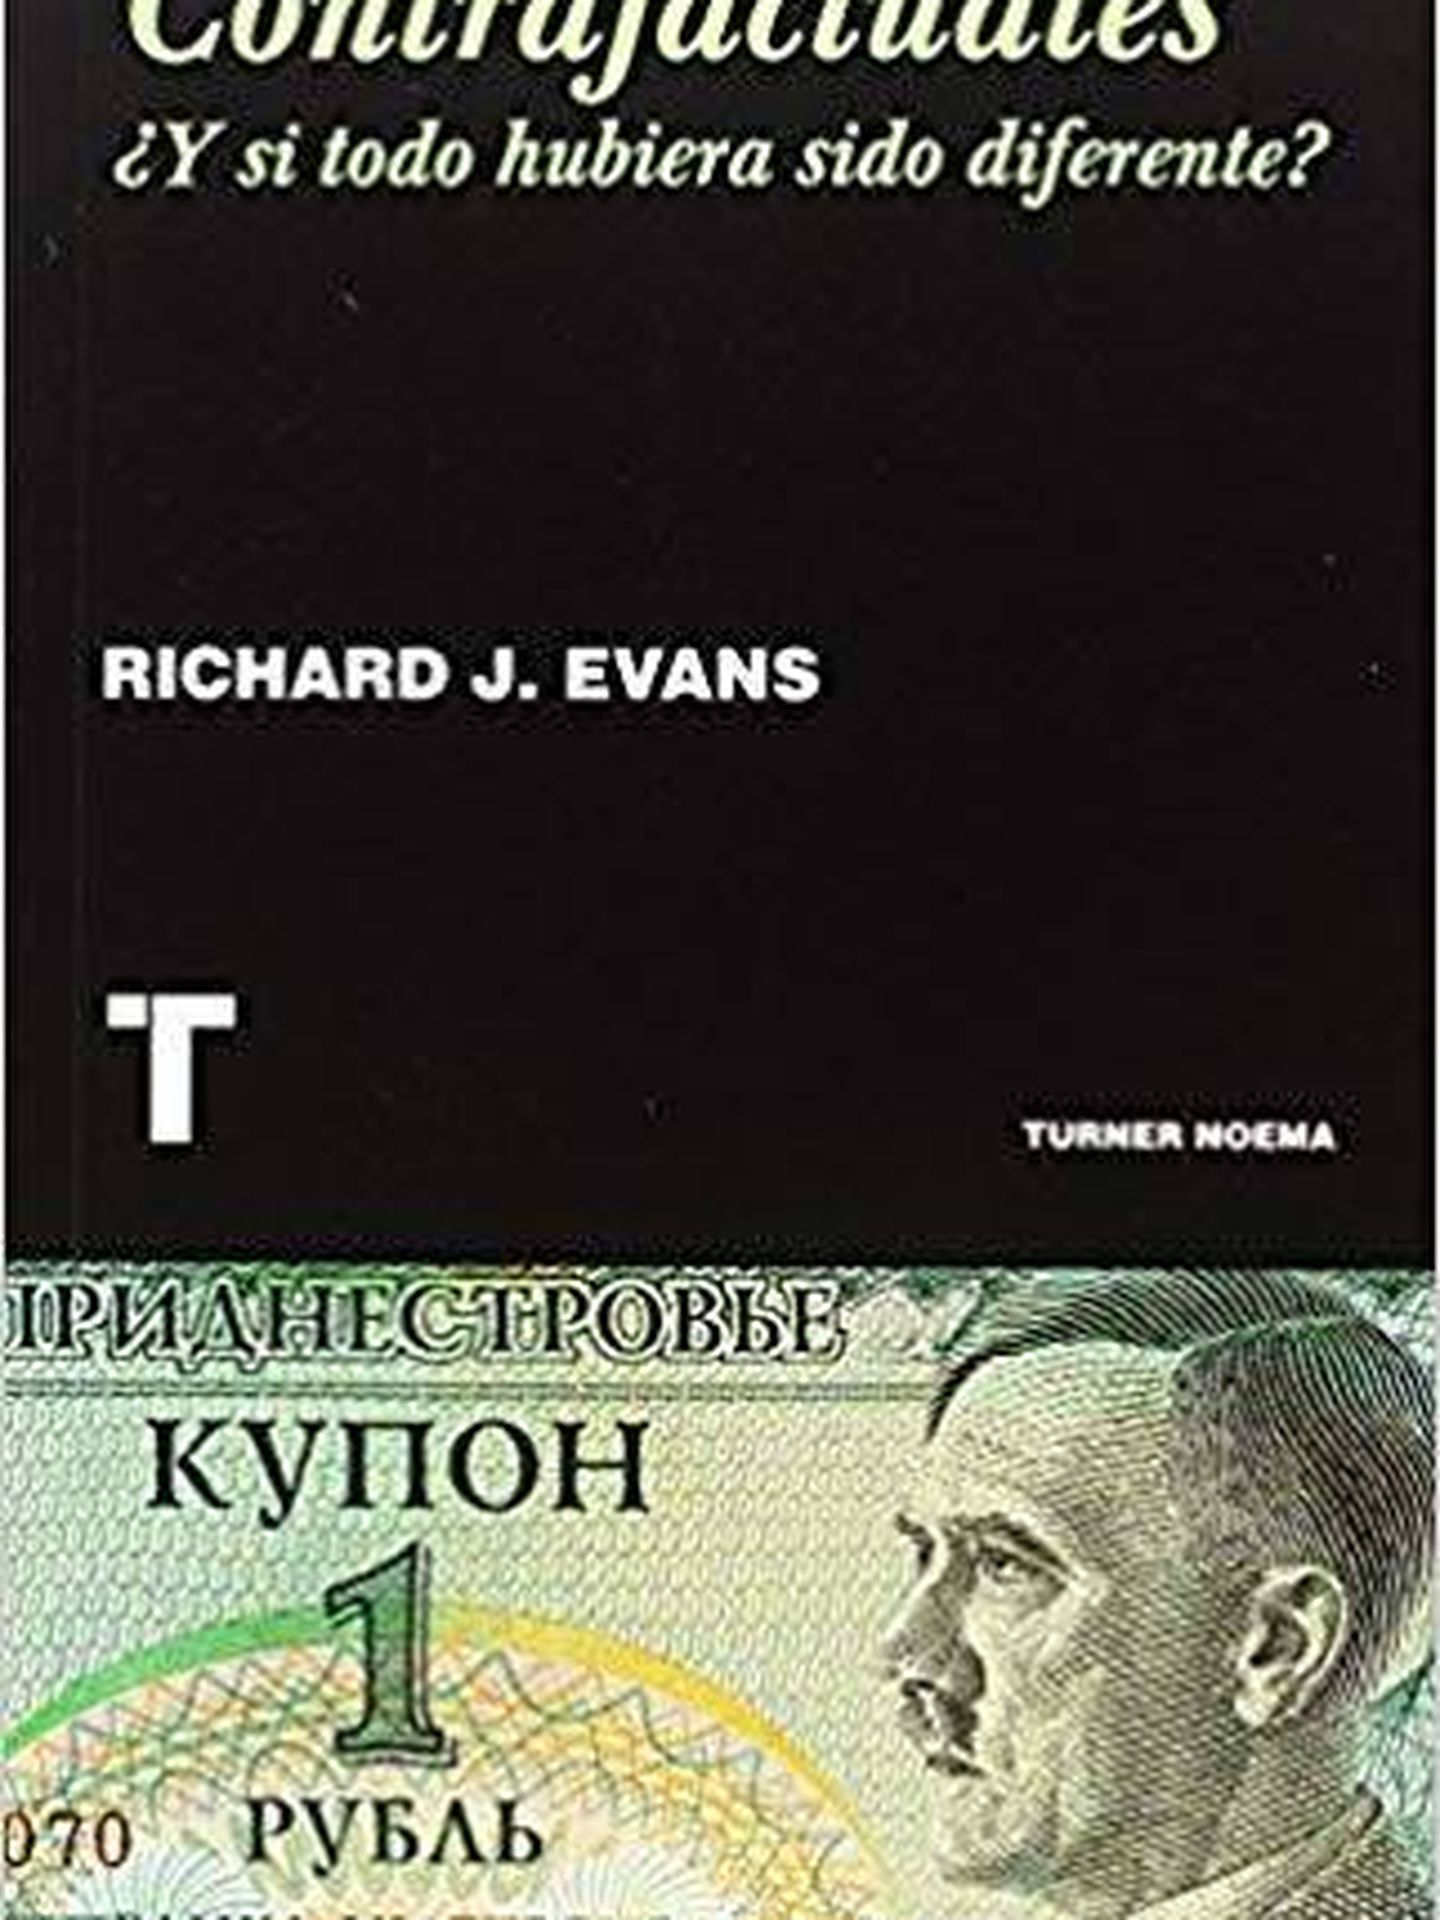 Contrafactuales, Richard. J. Evans (Turner Noema, 2018)